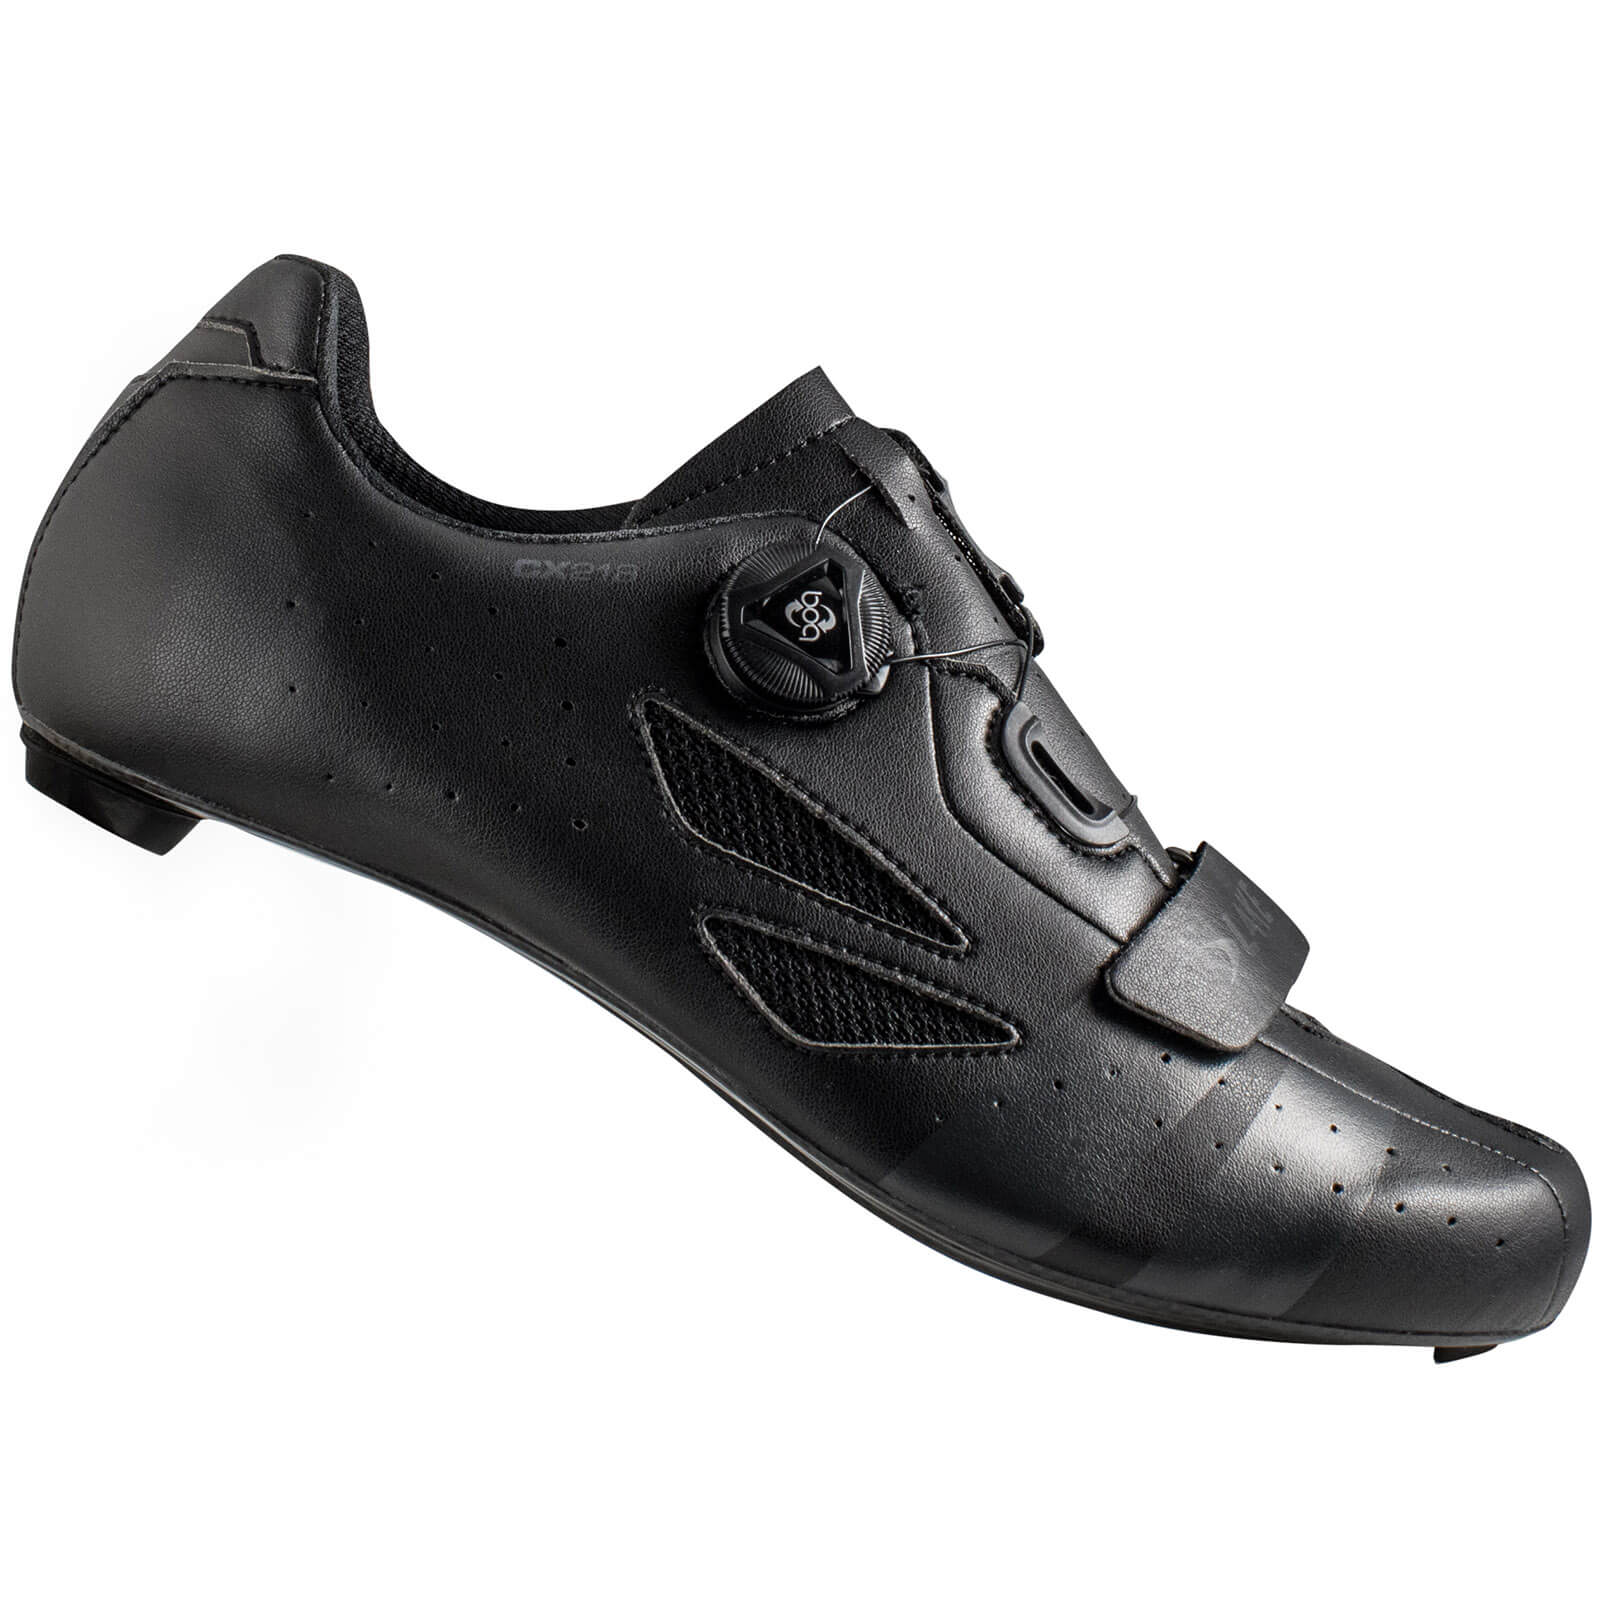 Lake CX218 Carbon Wide Fit Road Shoes - Black/Grey - EU 44